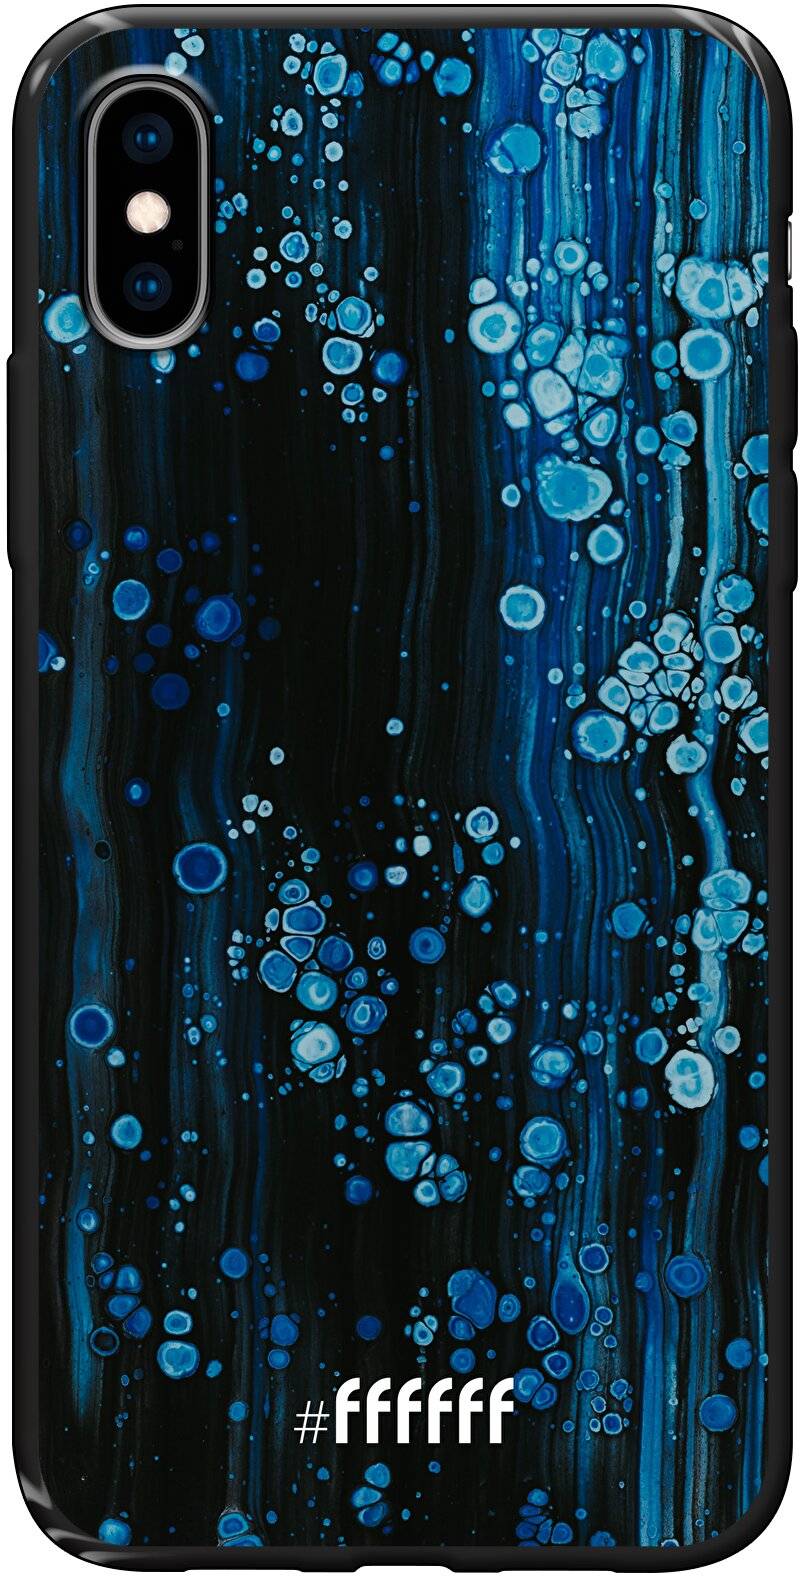 Bubbling Blues iPhone X